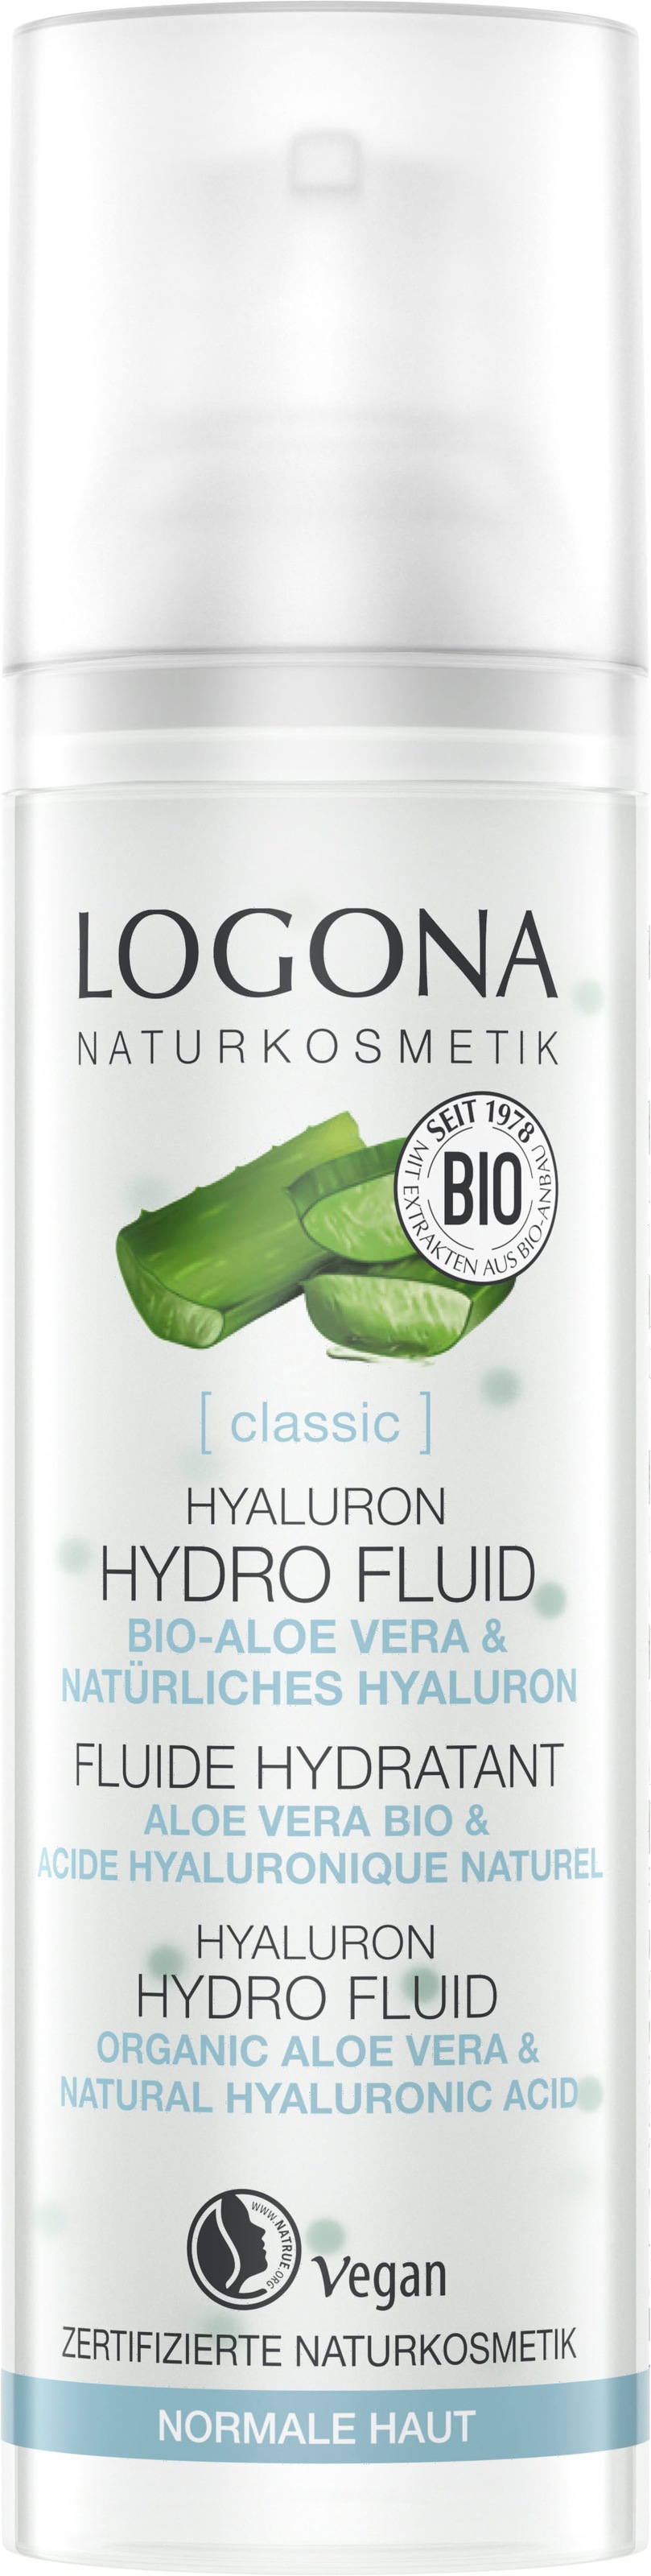 LOGONA Gesichtsfluid »Logona classic Hydro Fluid« Hyaluron kaufen online | BAUR